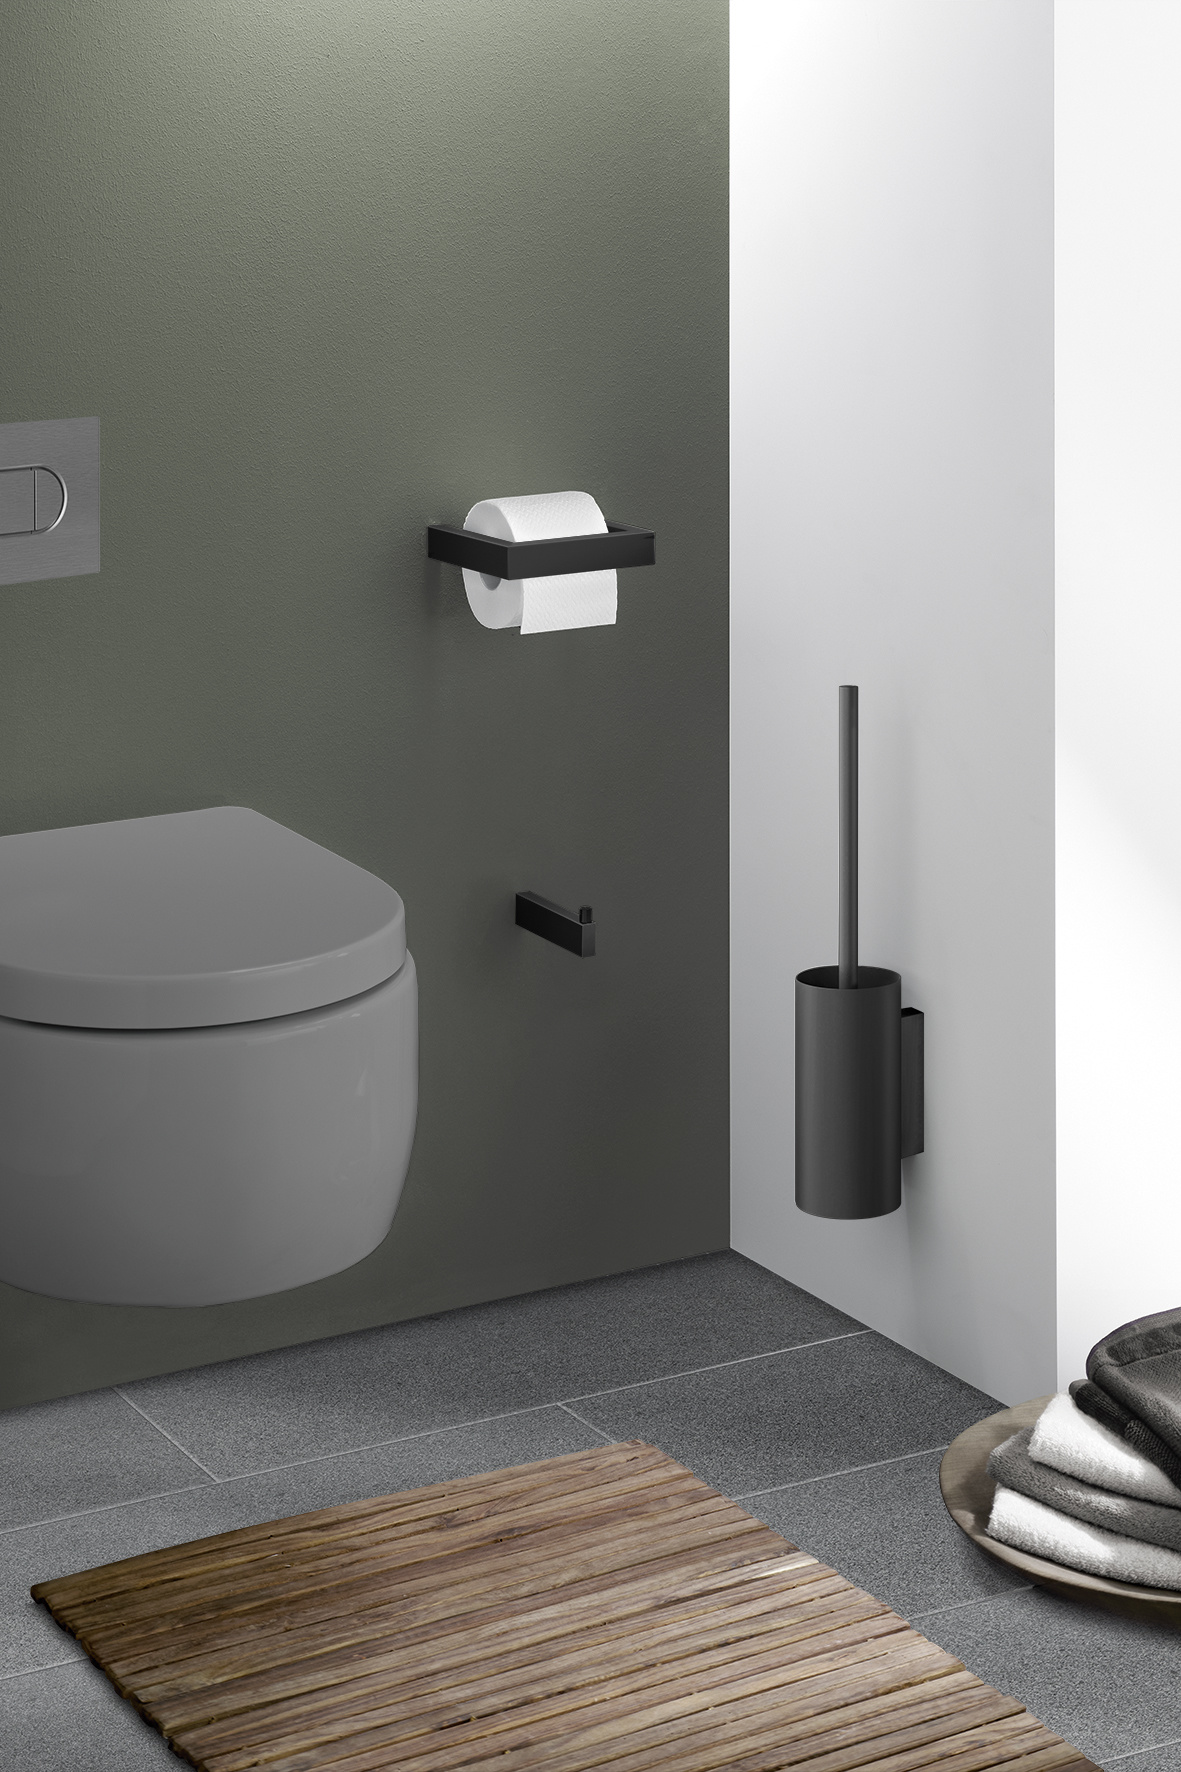 Brosse de toilette noir - WENDY  Brosse toilette, Brosse wc, Accessoires wc